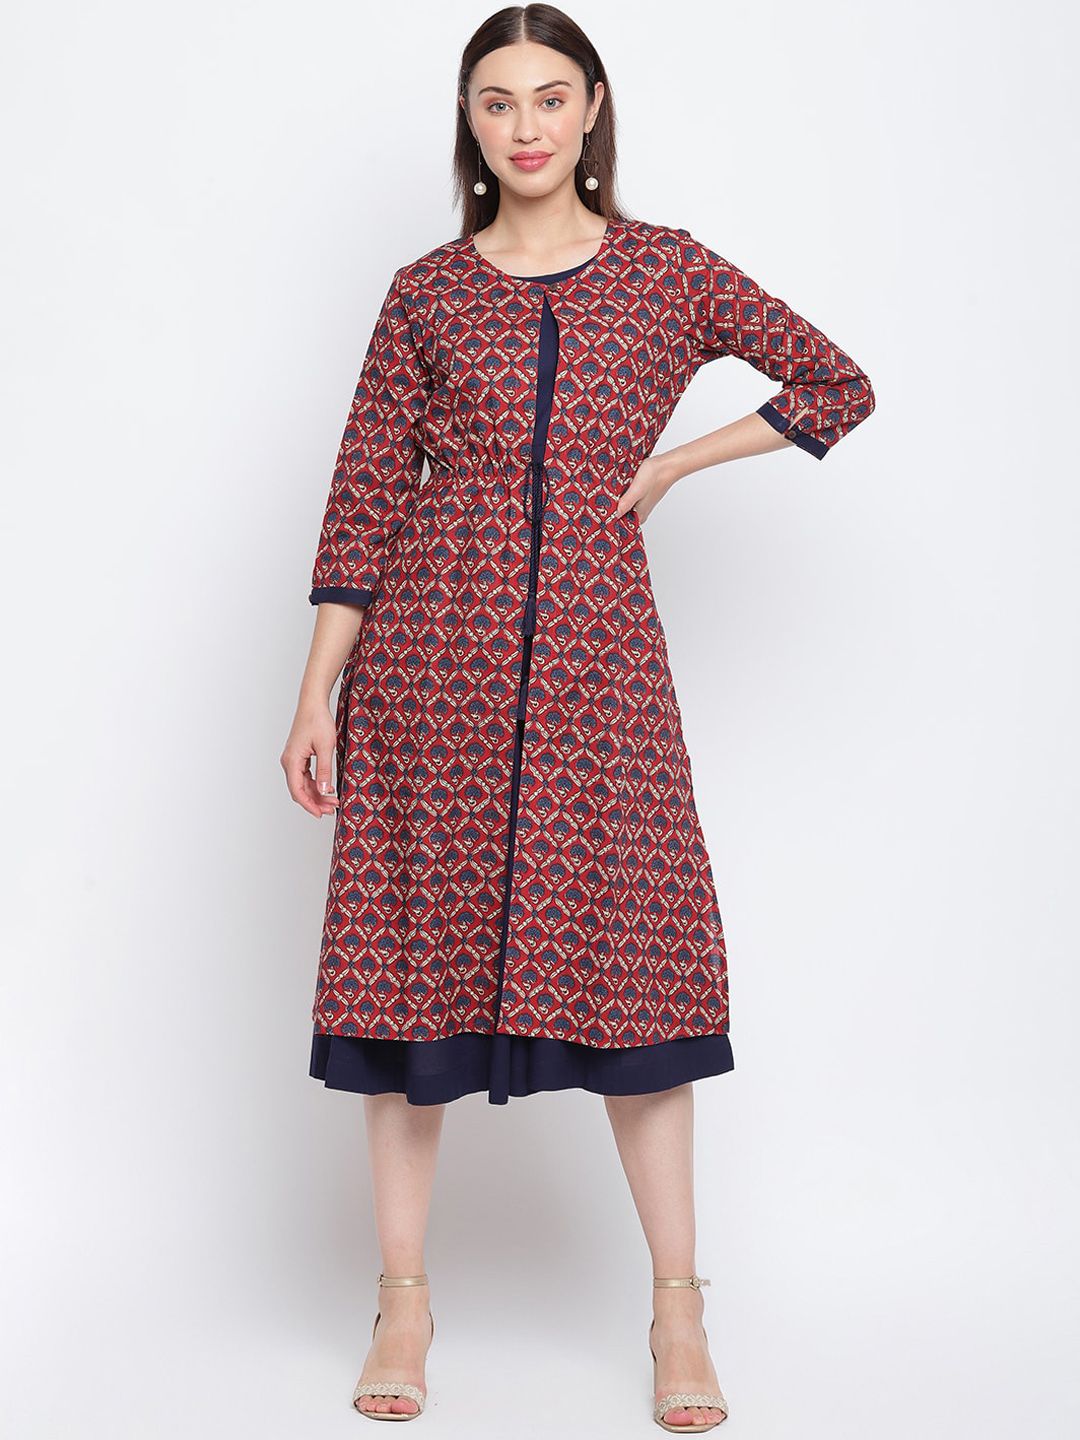 IMARA Maroon & Navy Blue Ethnic Motifs Ethnic A-Line Midi Layered Cotton Dress Price in India